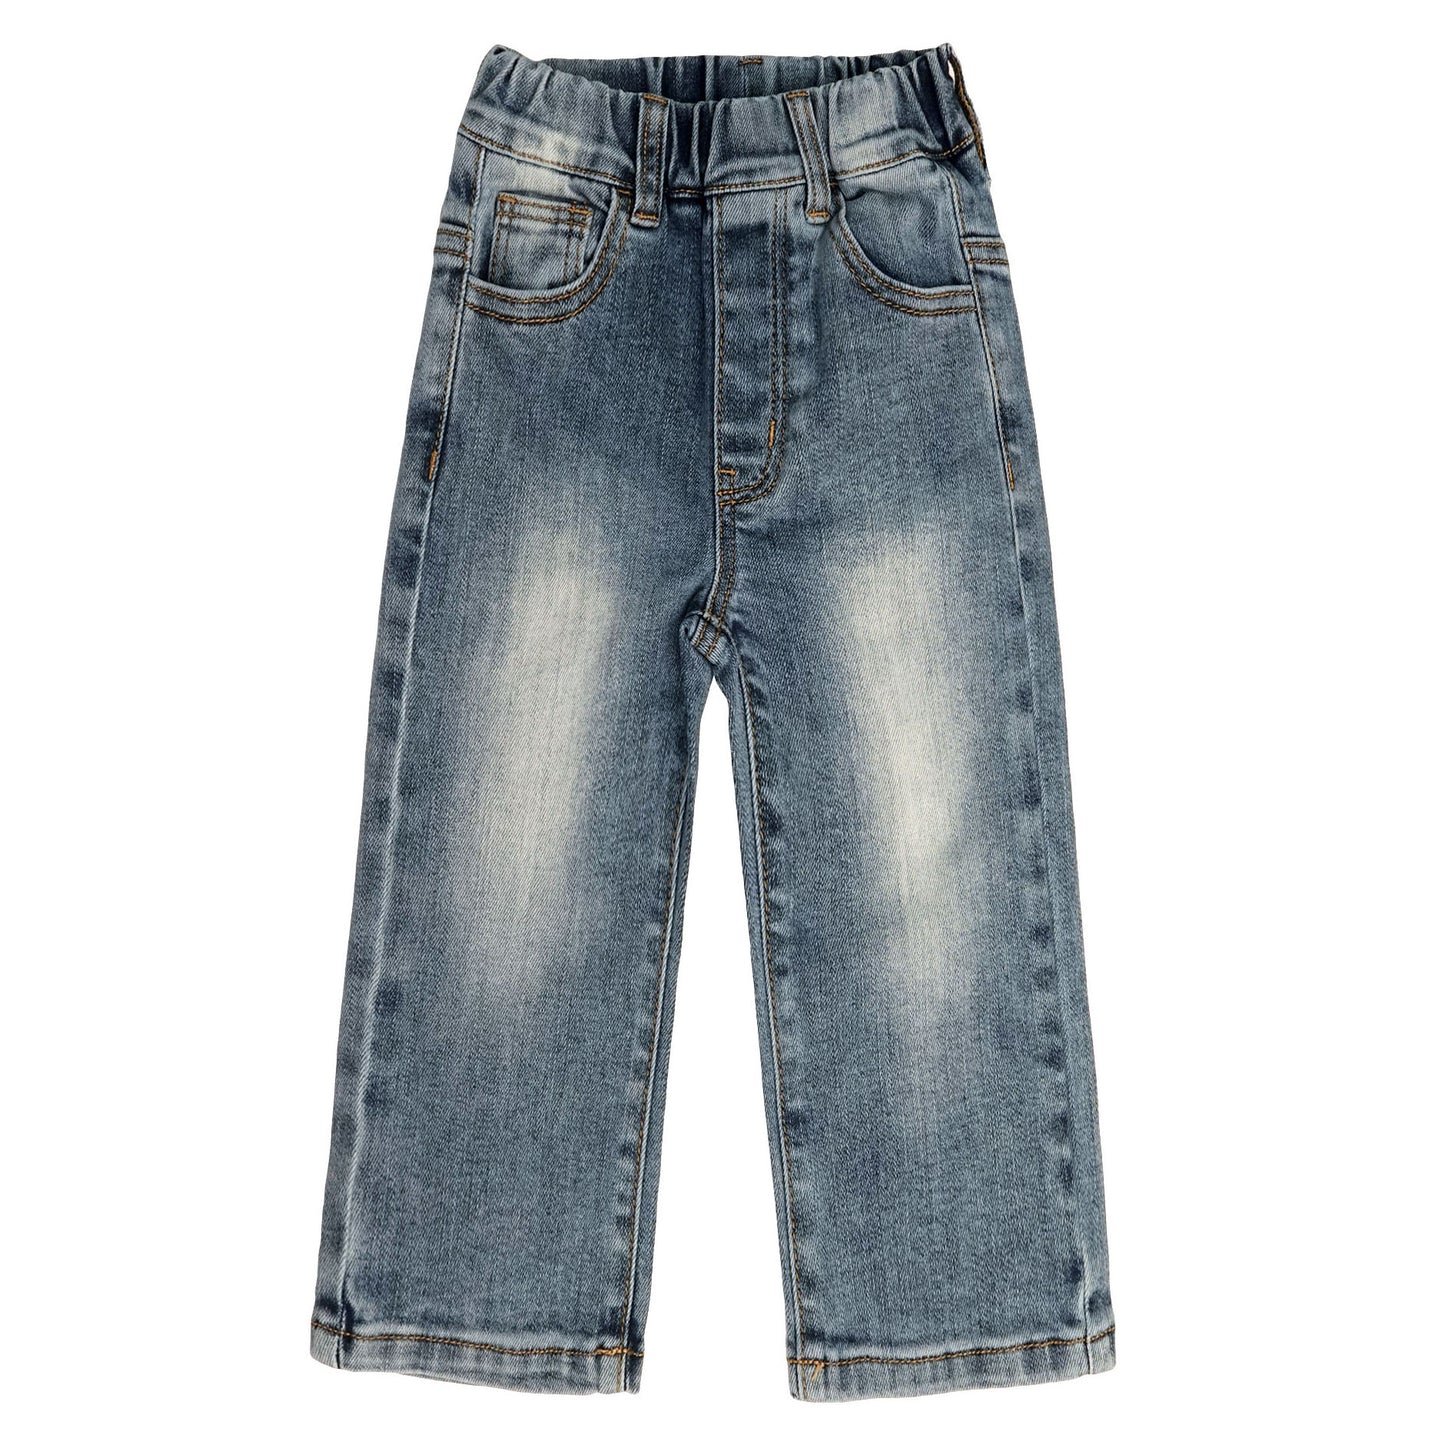 Toddler & Big Girls Jeans, 18M-13T Simple Desgin Ribbed Waist Stretch Denim Pants